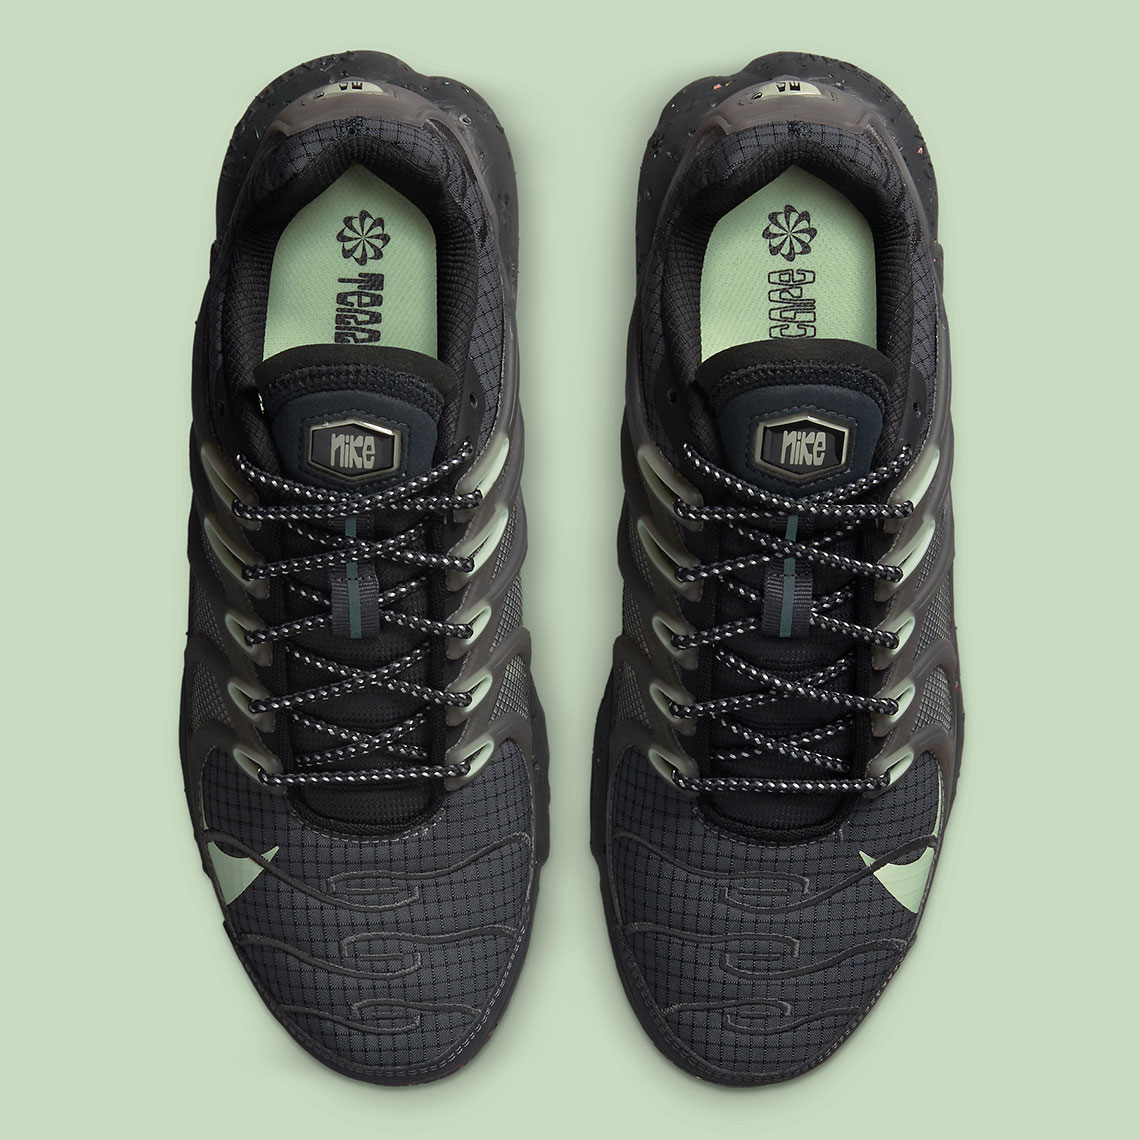 wholesale nike af1s shoes black sneakers boys size Black Barely Volt Dc6078 002 8